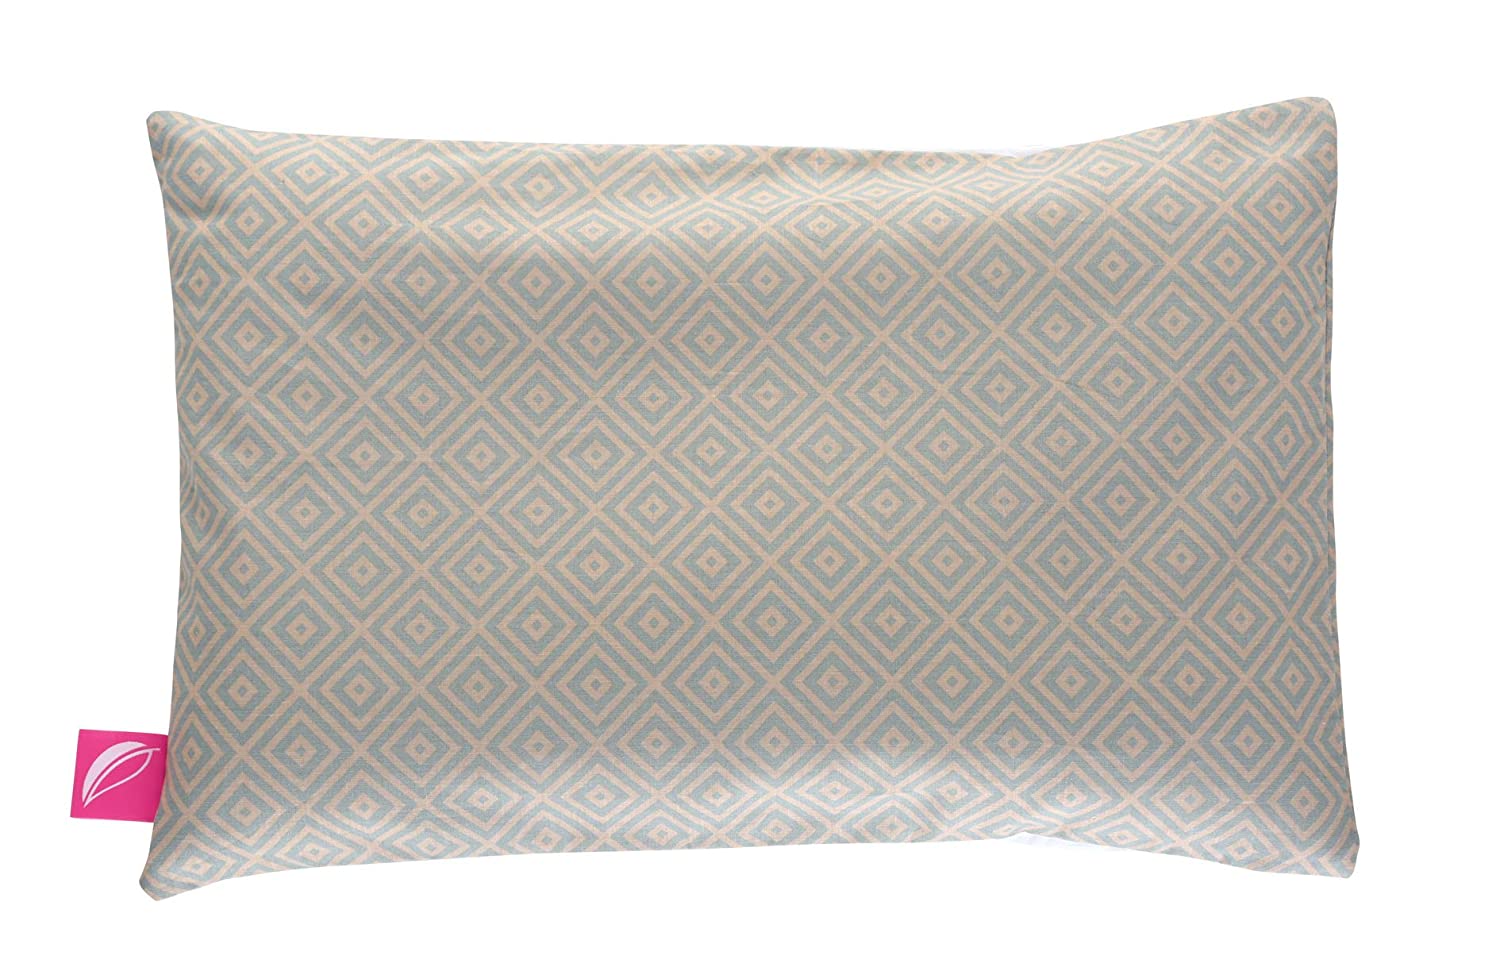 Baby Pillow Children\'s Pillow 35 x 40 cm Öko Tex Standard 100 Includes Removable Cover 100% Cotton Squares Apricot